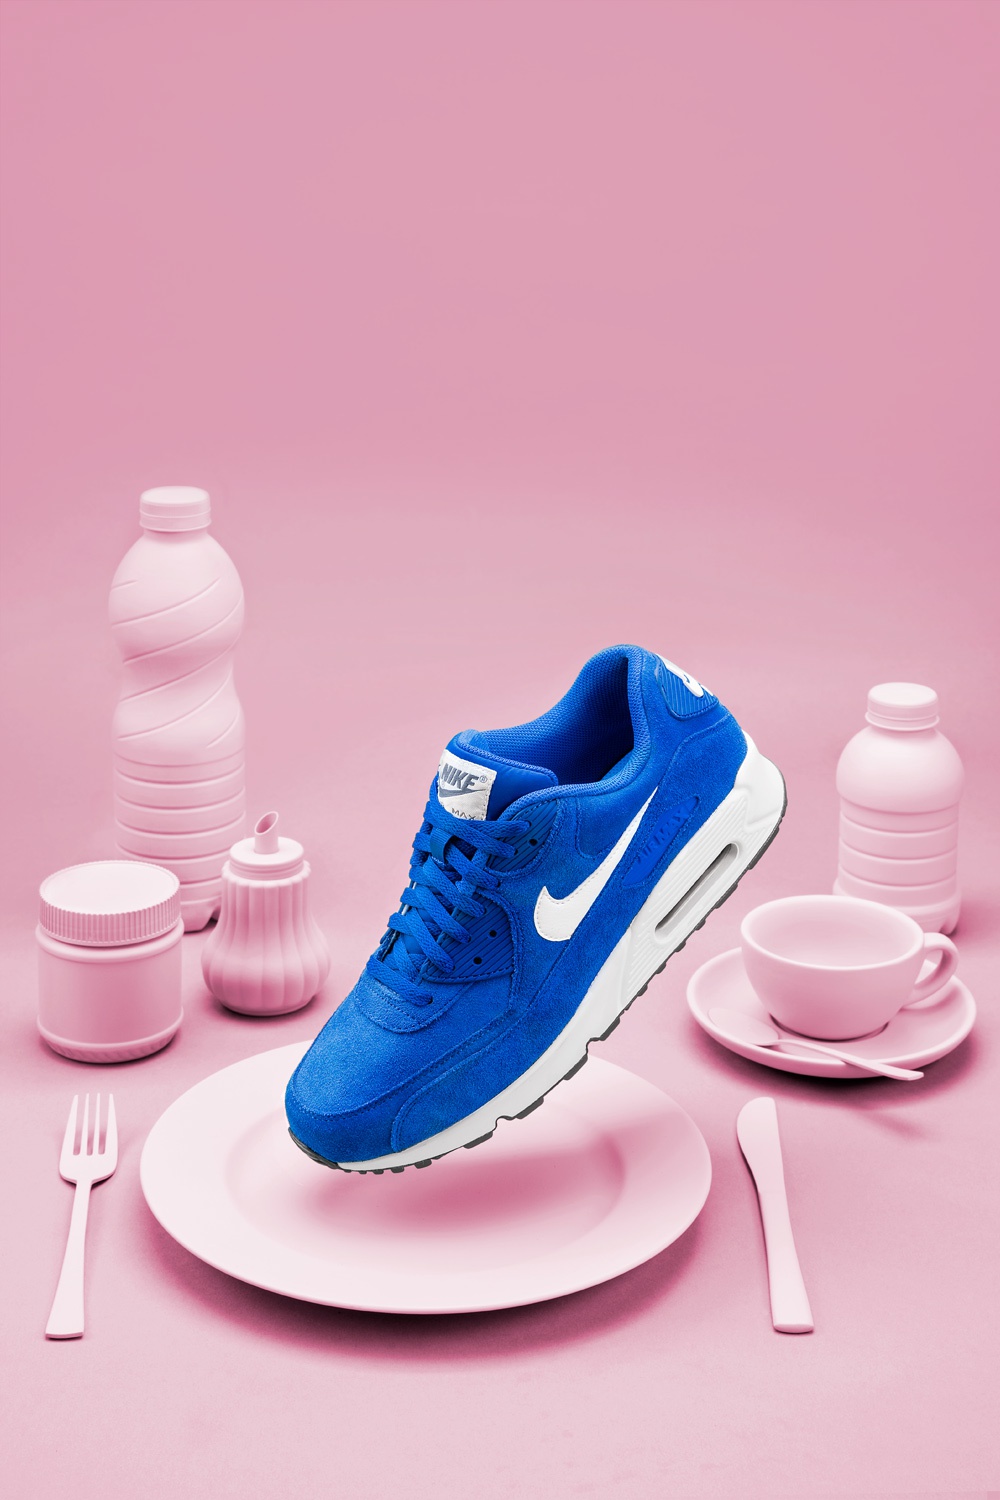 Nike_Air_Max_90_Royal_Blue_Y2A8435_1600px.jpg